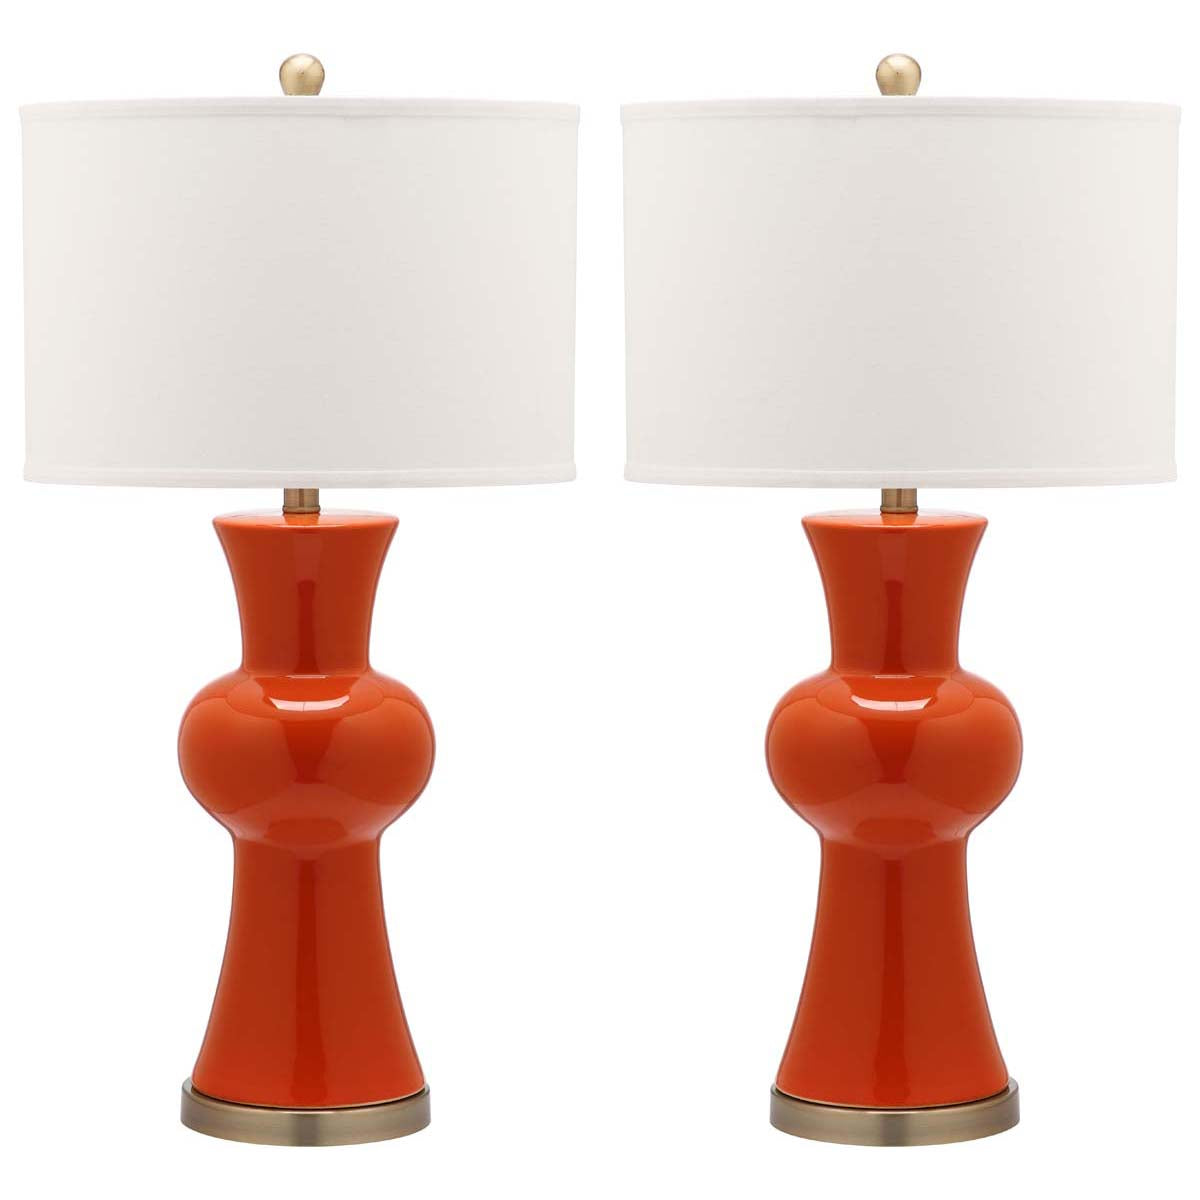 Safavieh Lola 30 Inch H Column Lamp, LIT4150 - Orange (Set of 2)